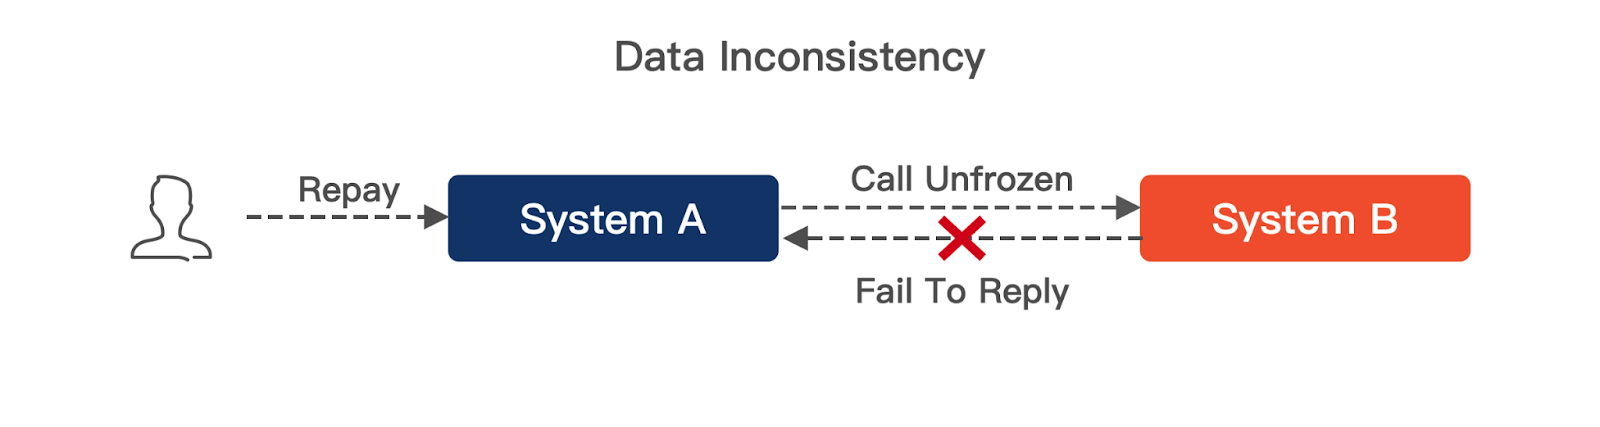 Fig1. Data Inconsistency